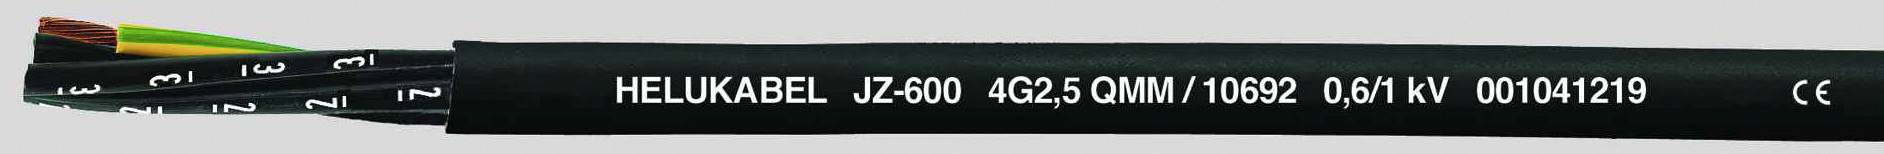 HELUKABEL JZ-600 Steuerleitung 5 G 0.75 mm² Schwarz 10587-500 500 m